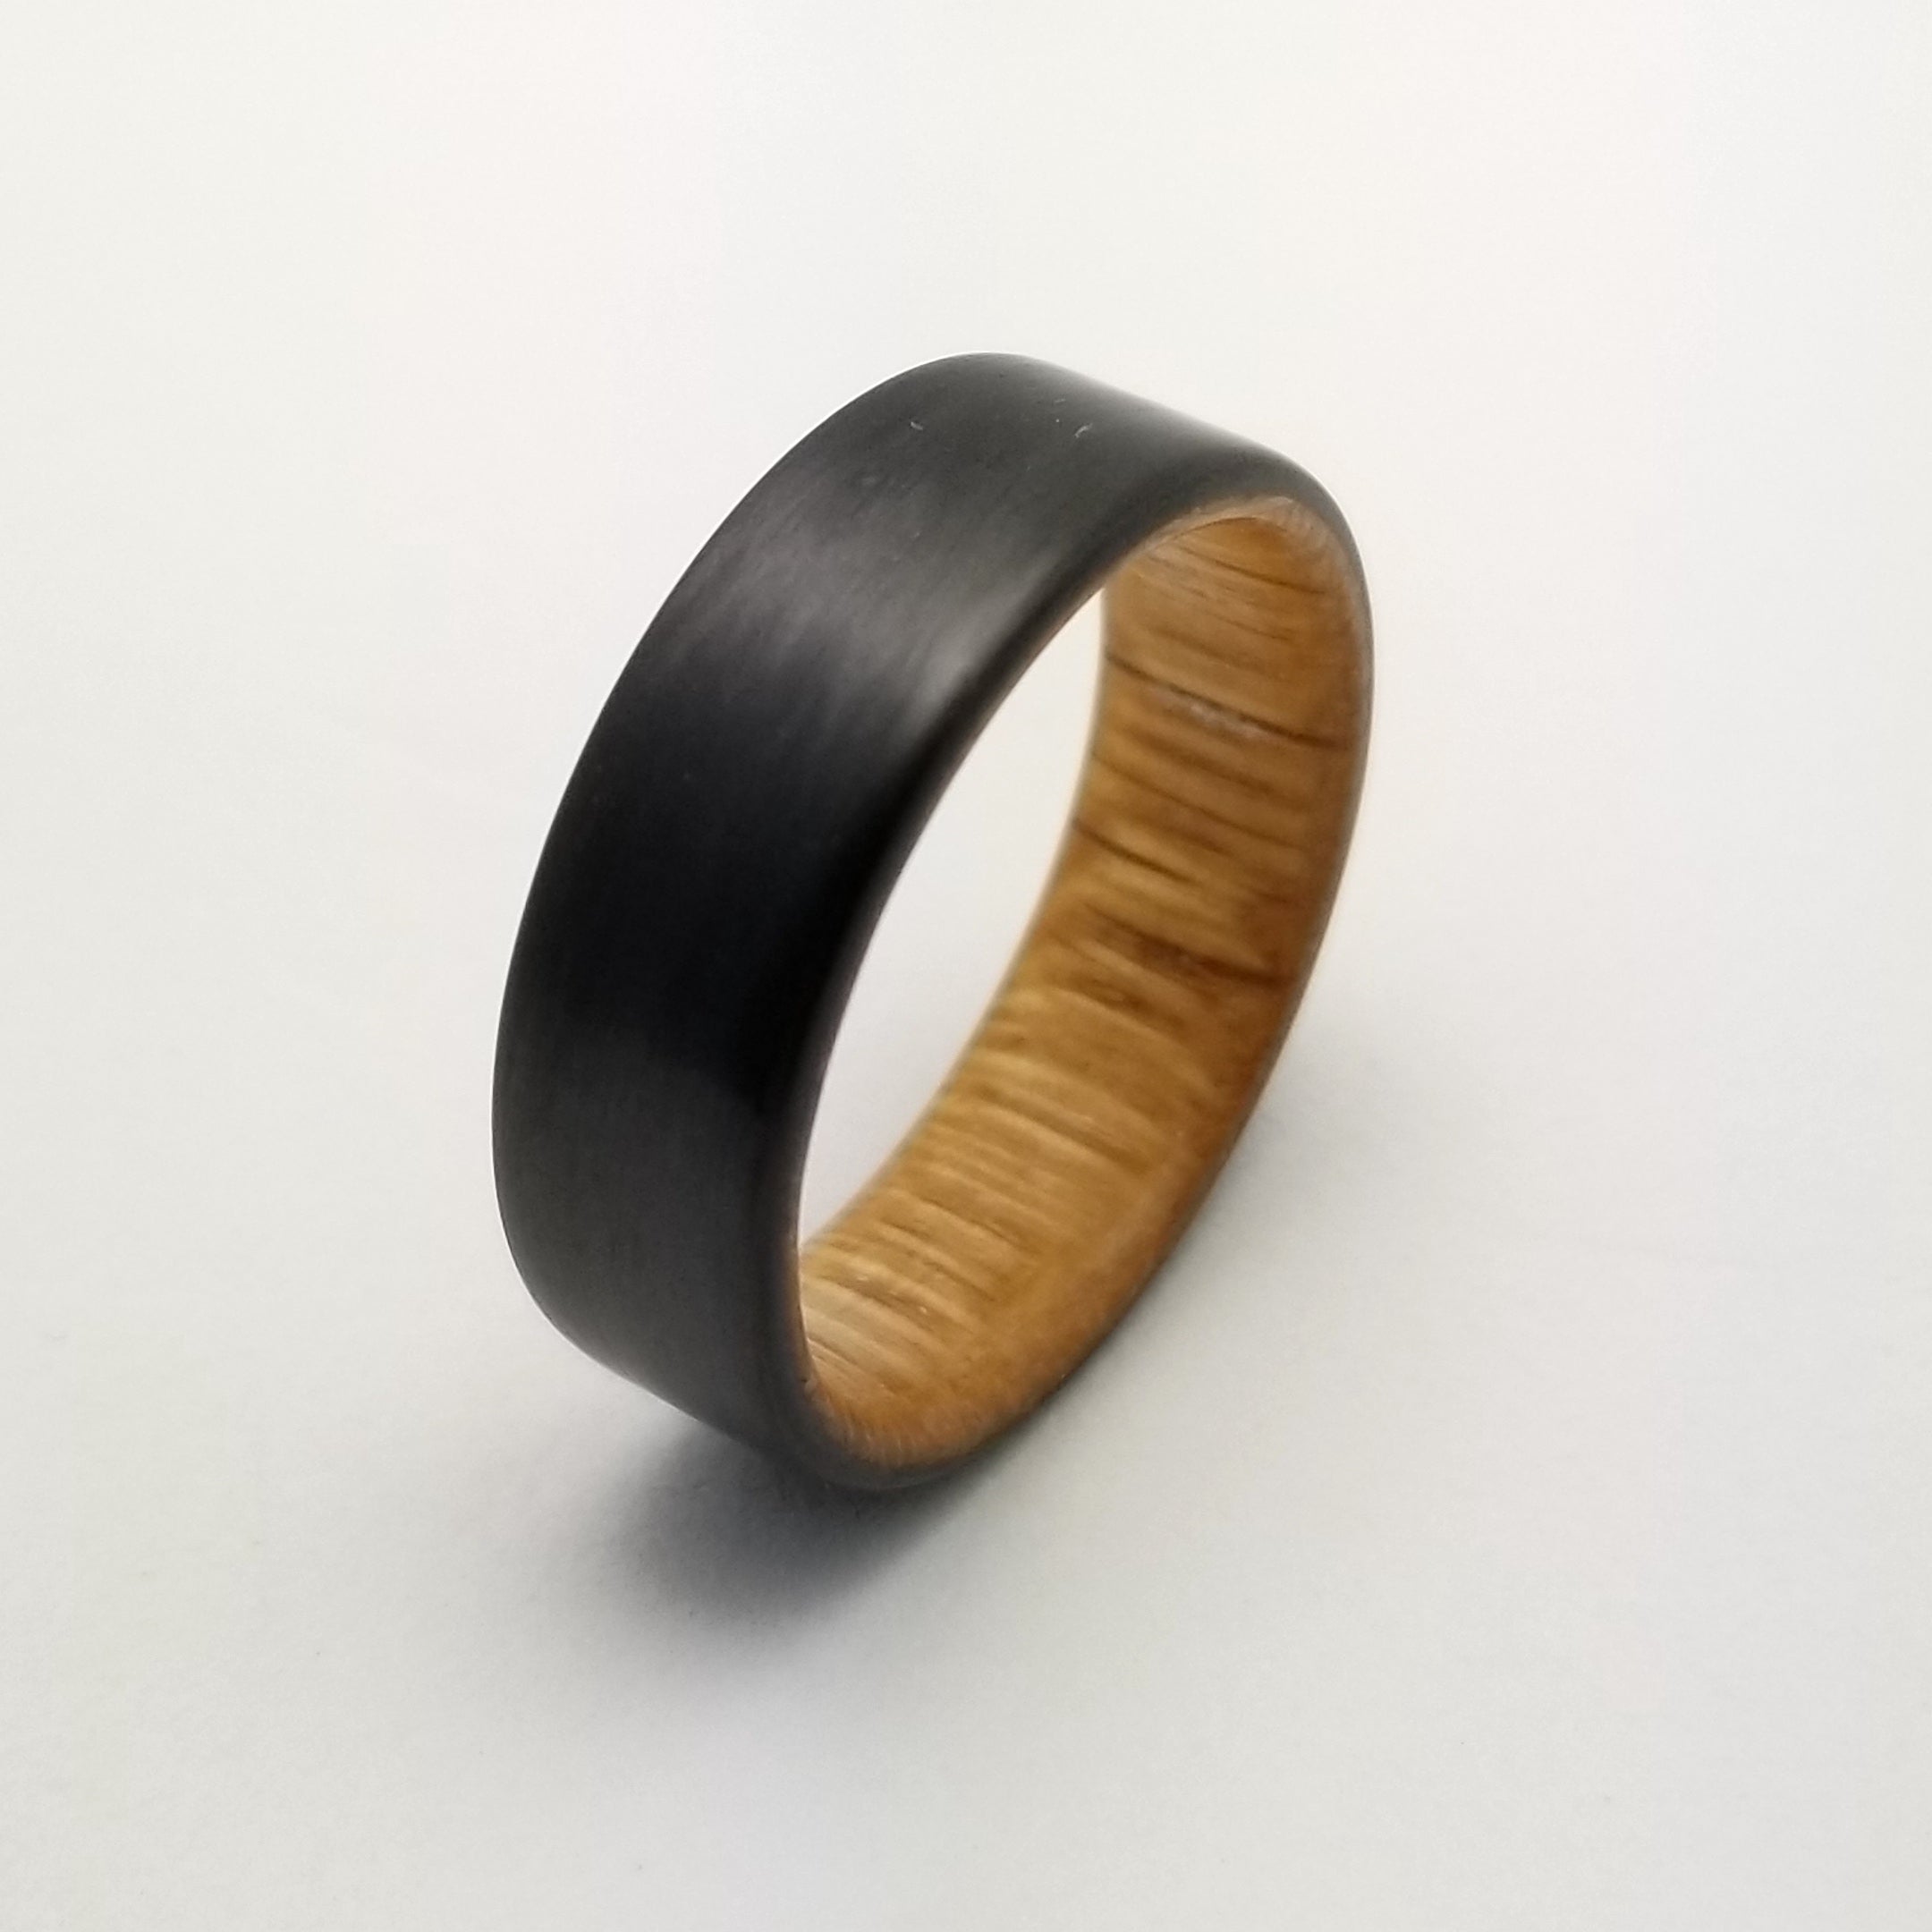 Men's Carbon Fiber Ring